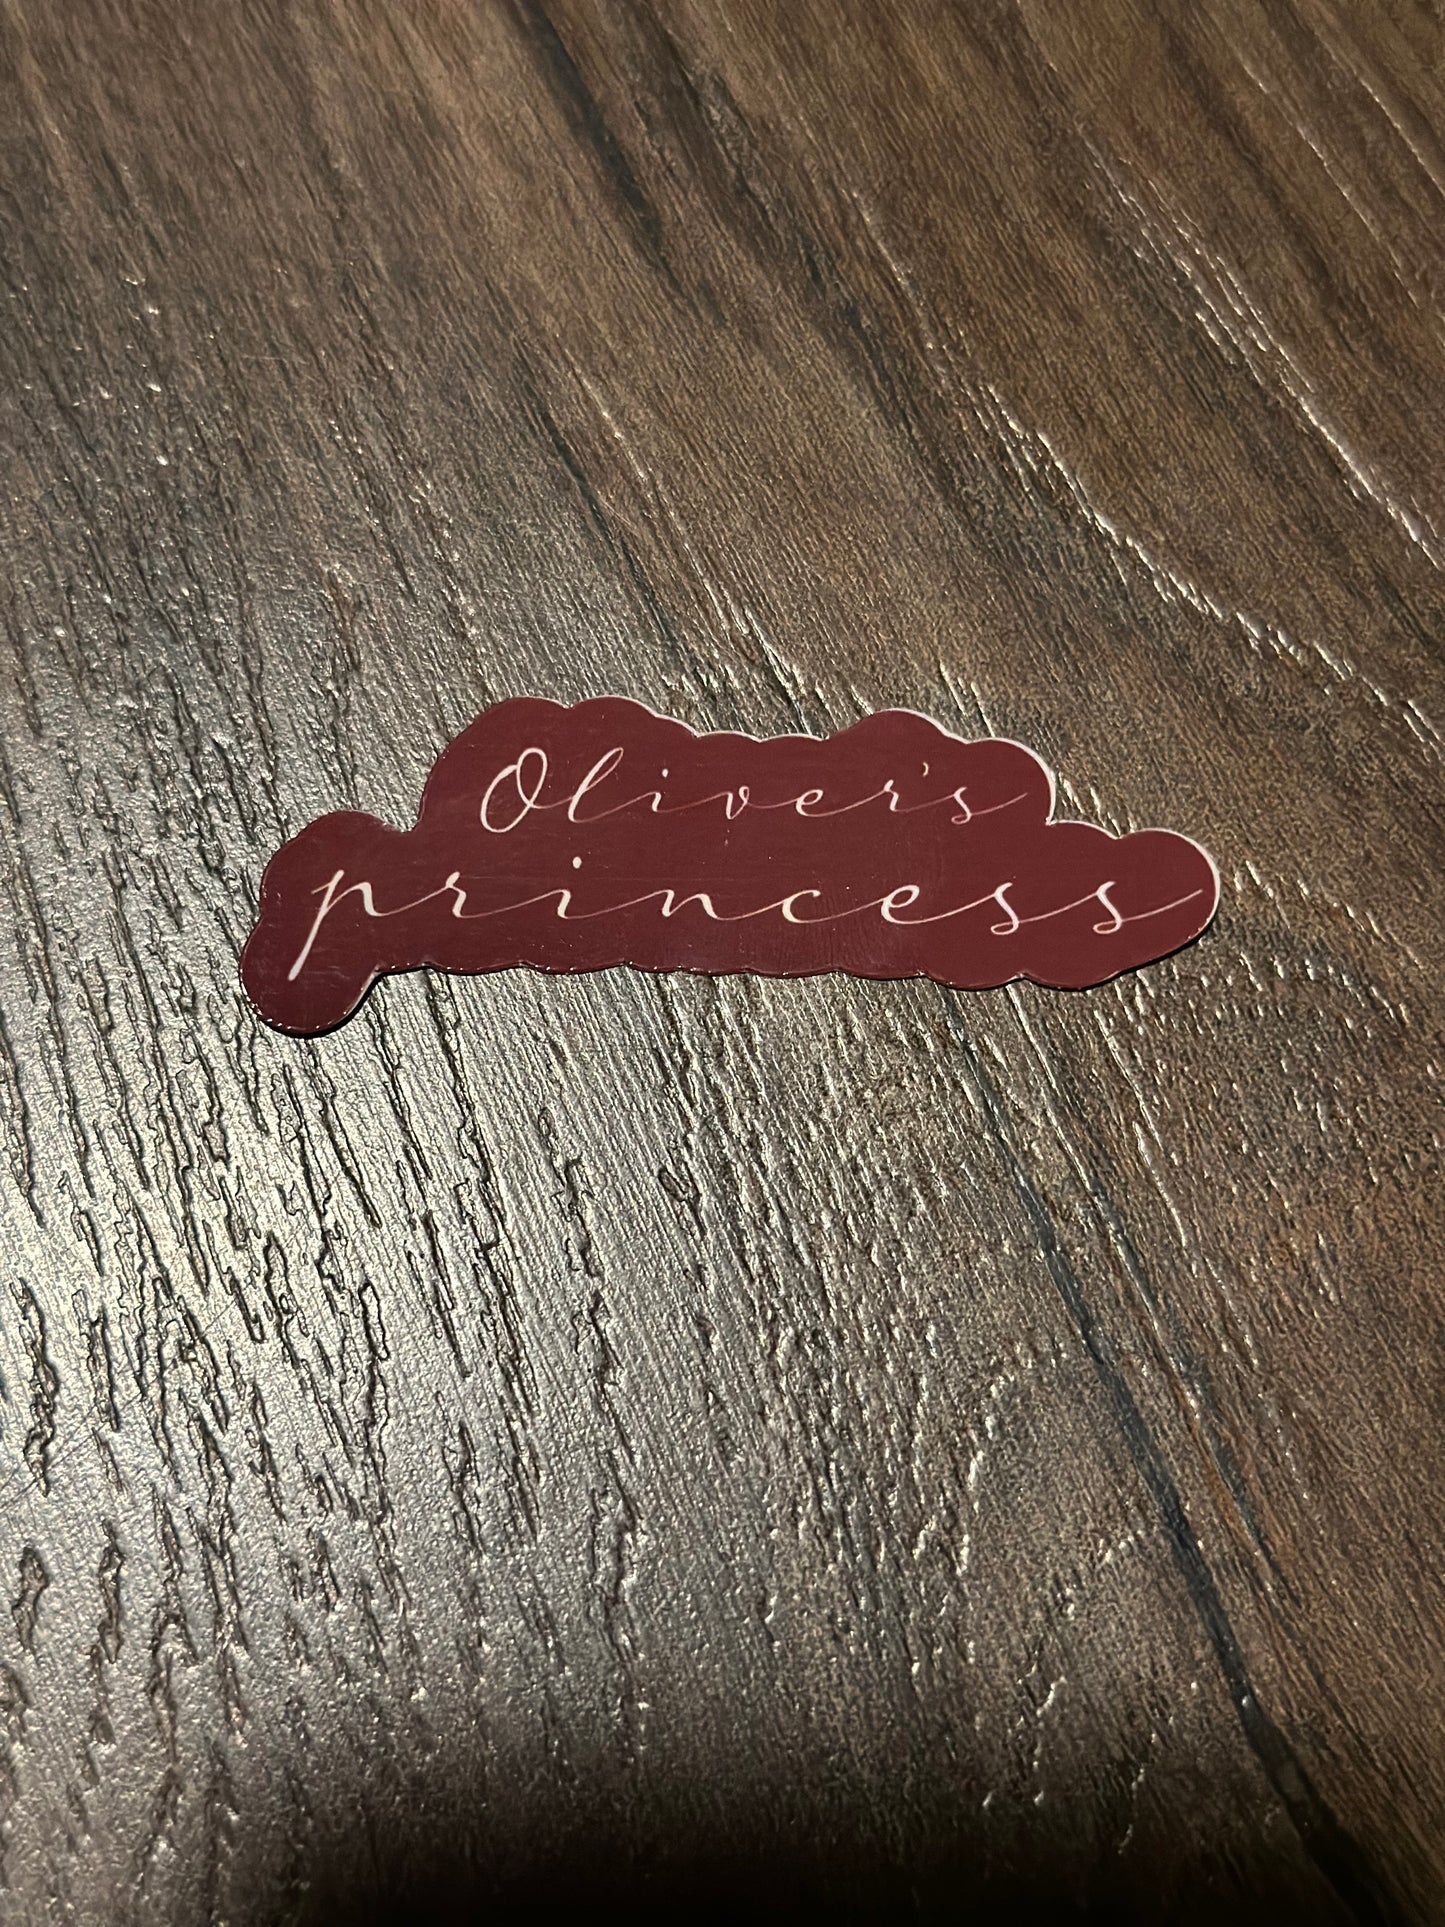 Oliver's Princess Nickname Sticker